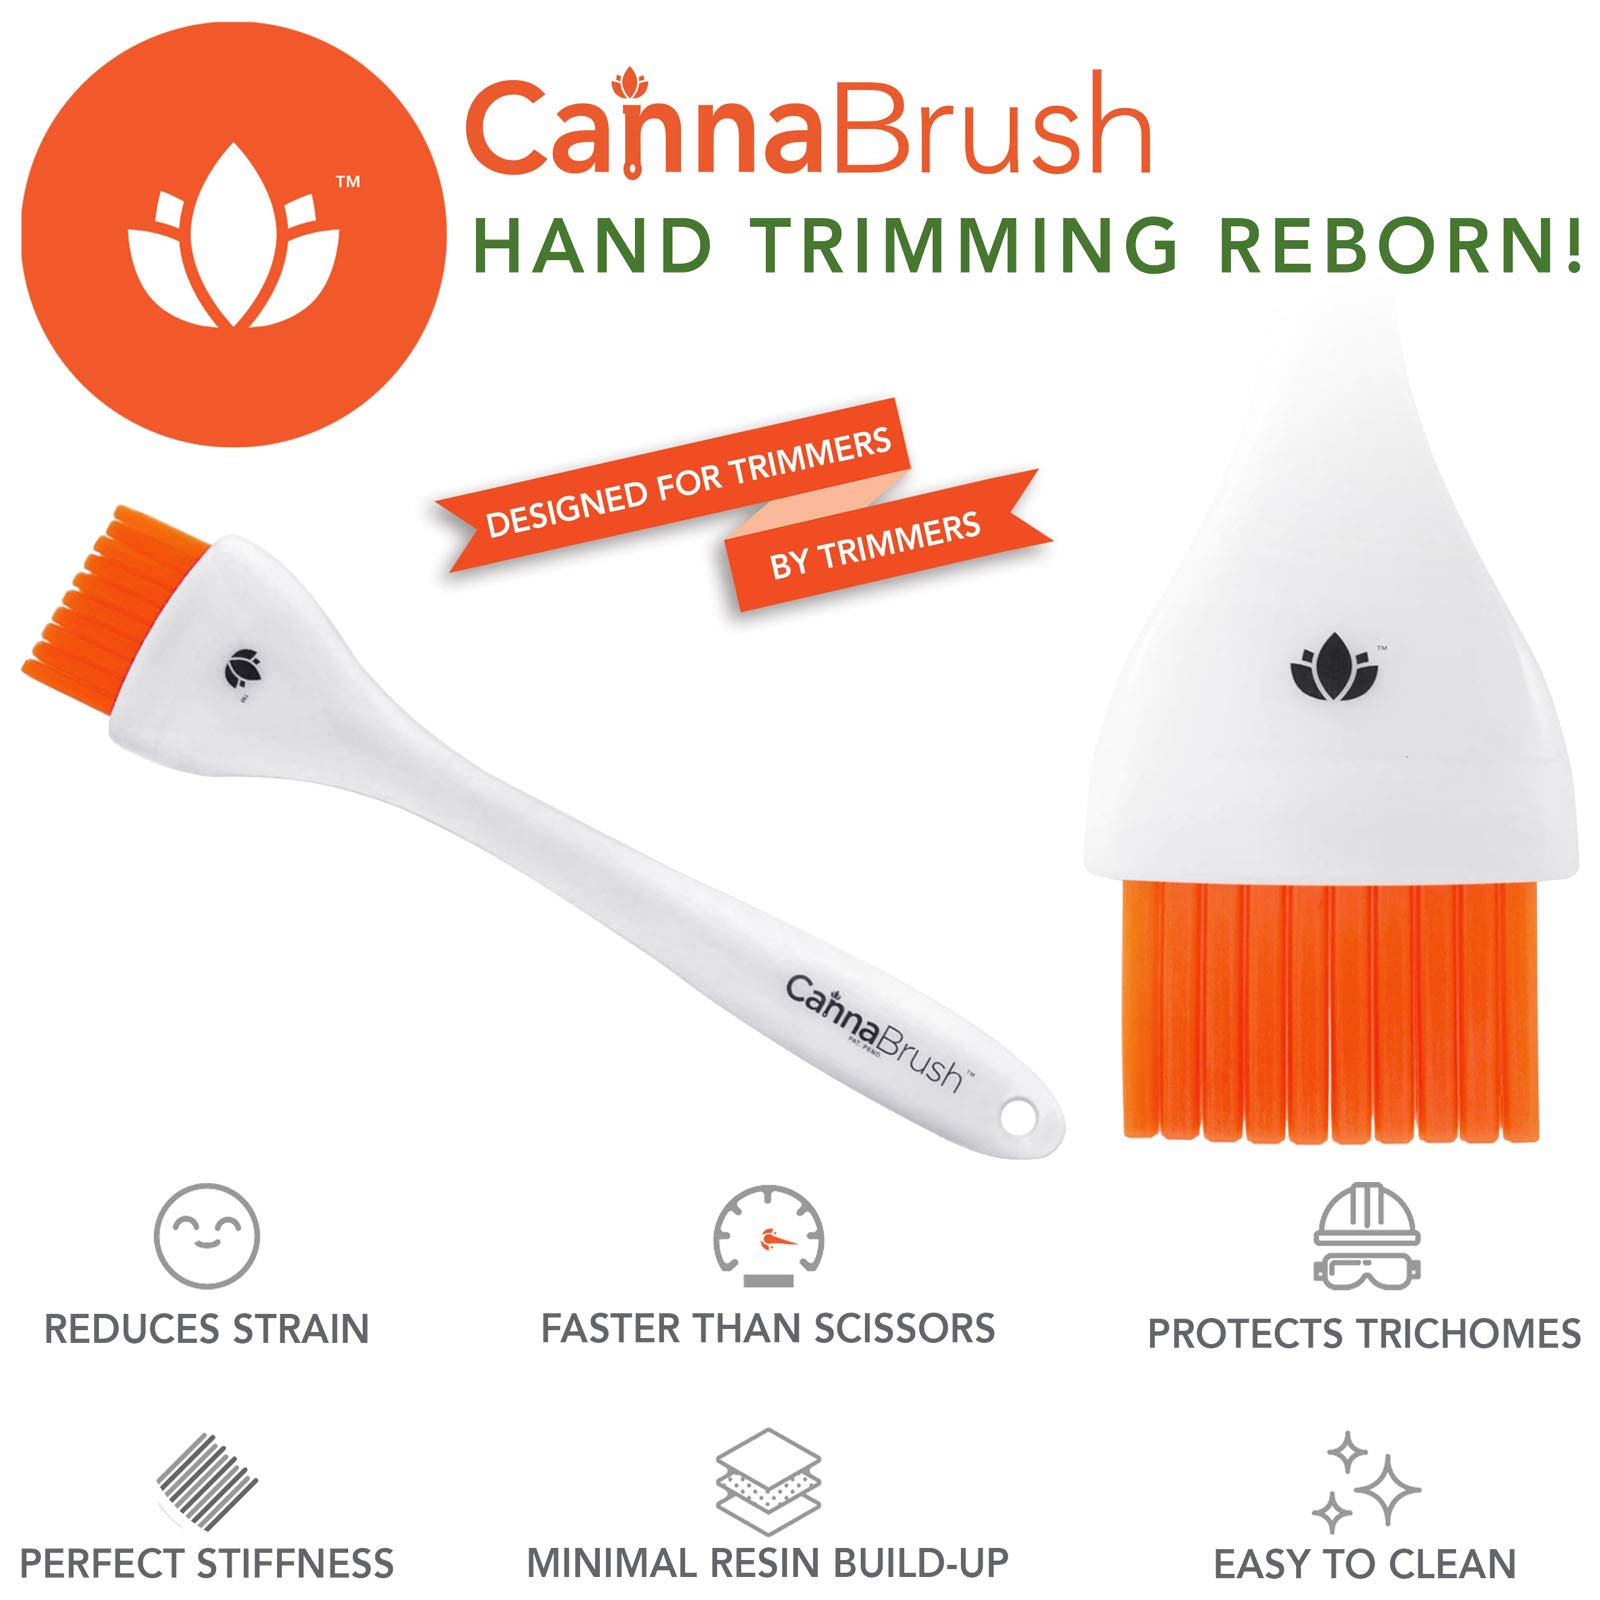 Cannabrush Trimming Hand Tool